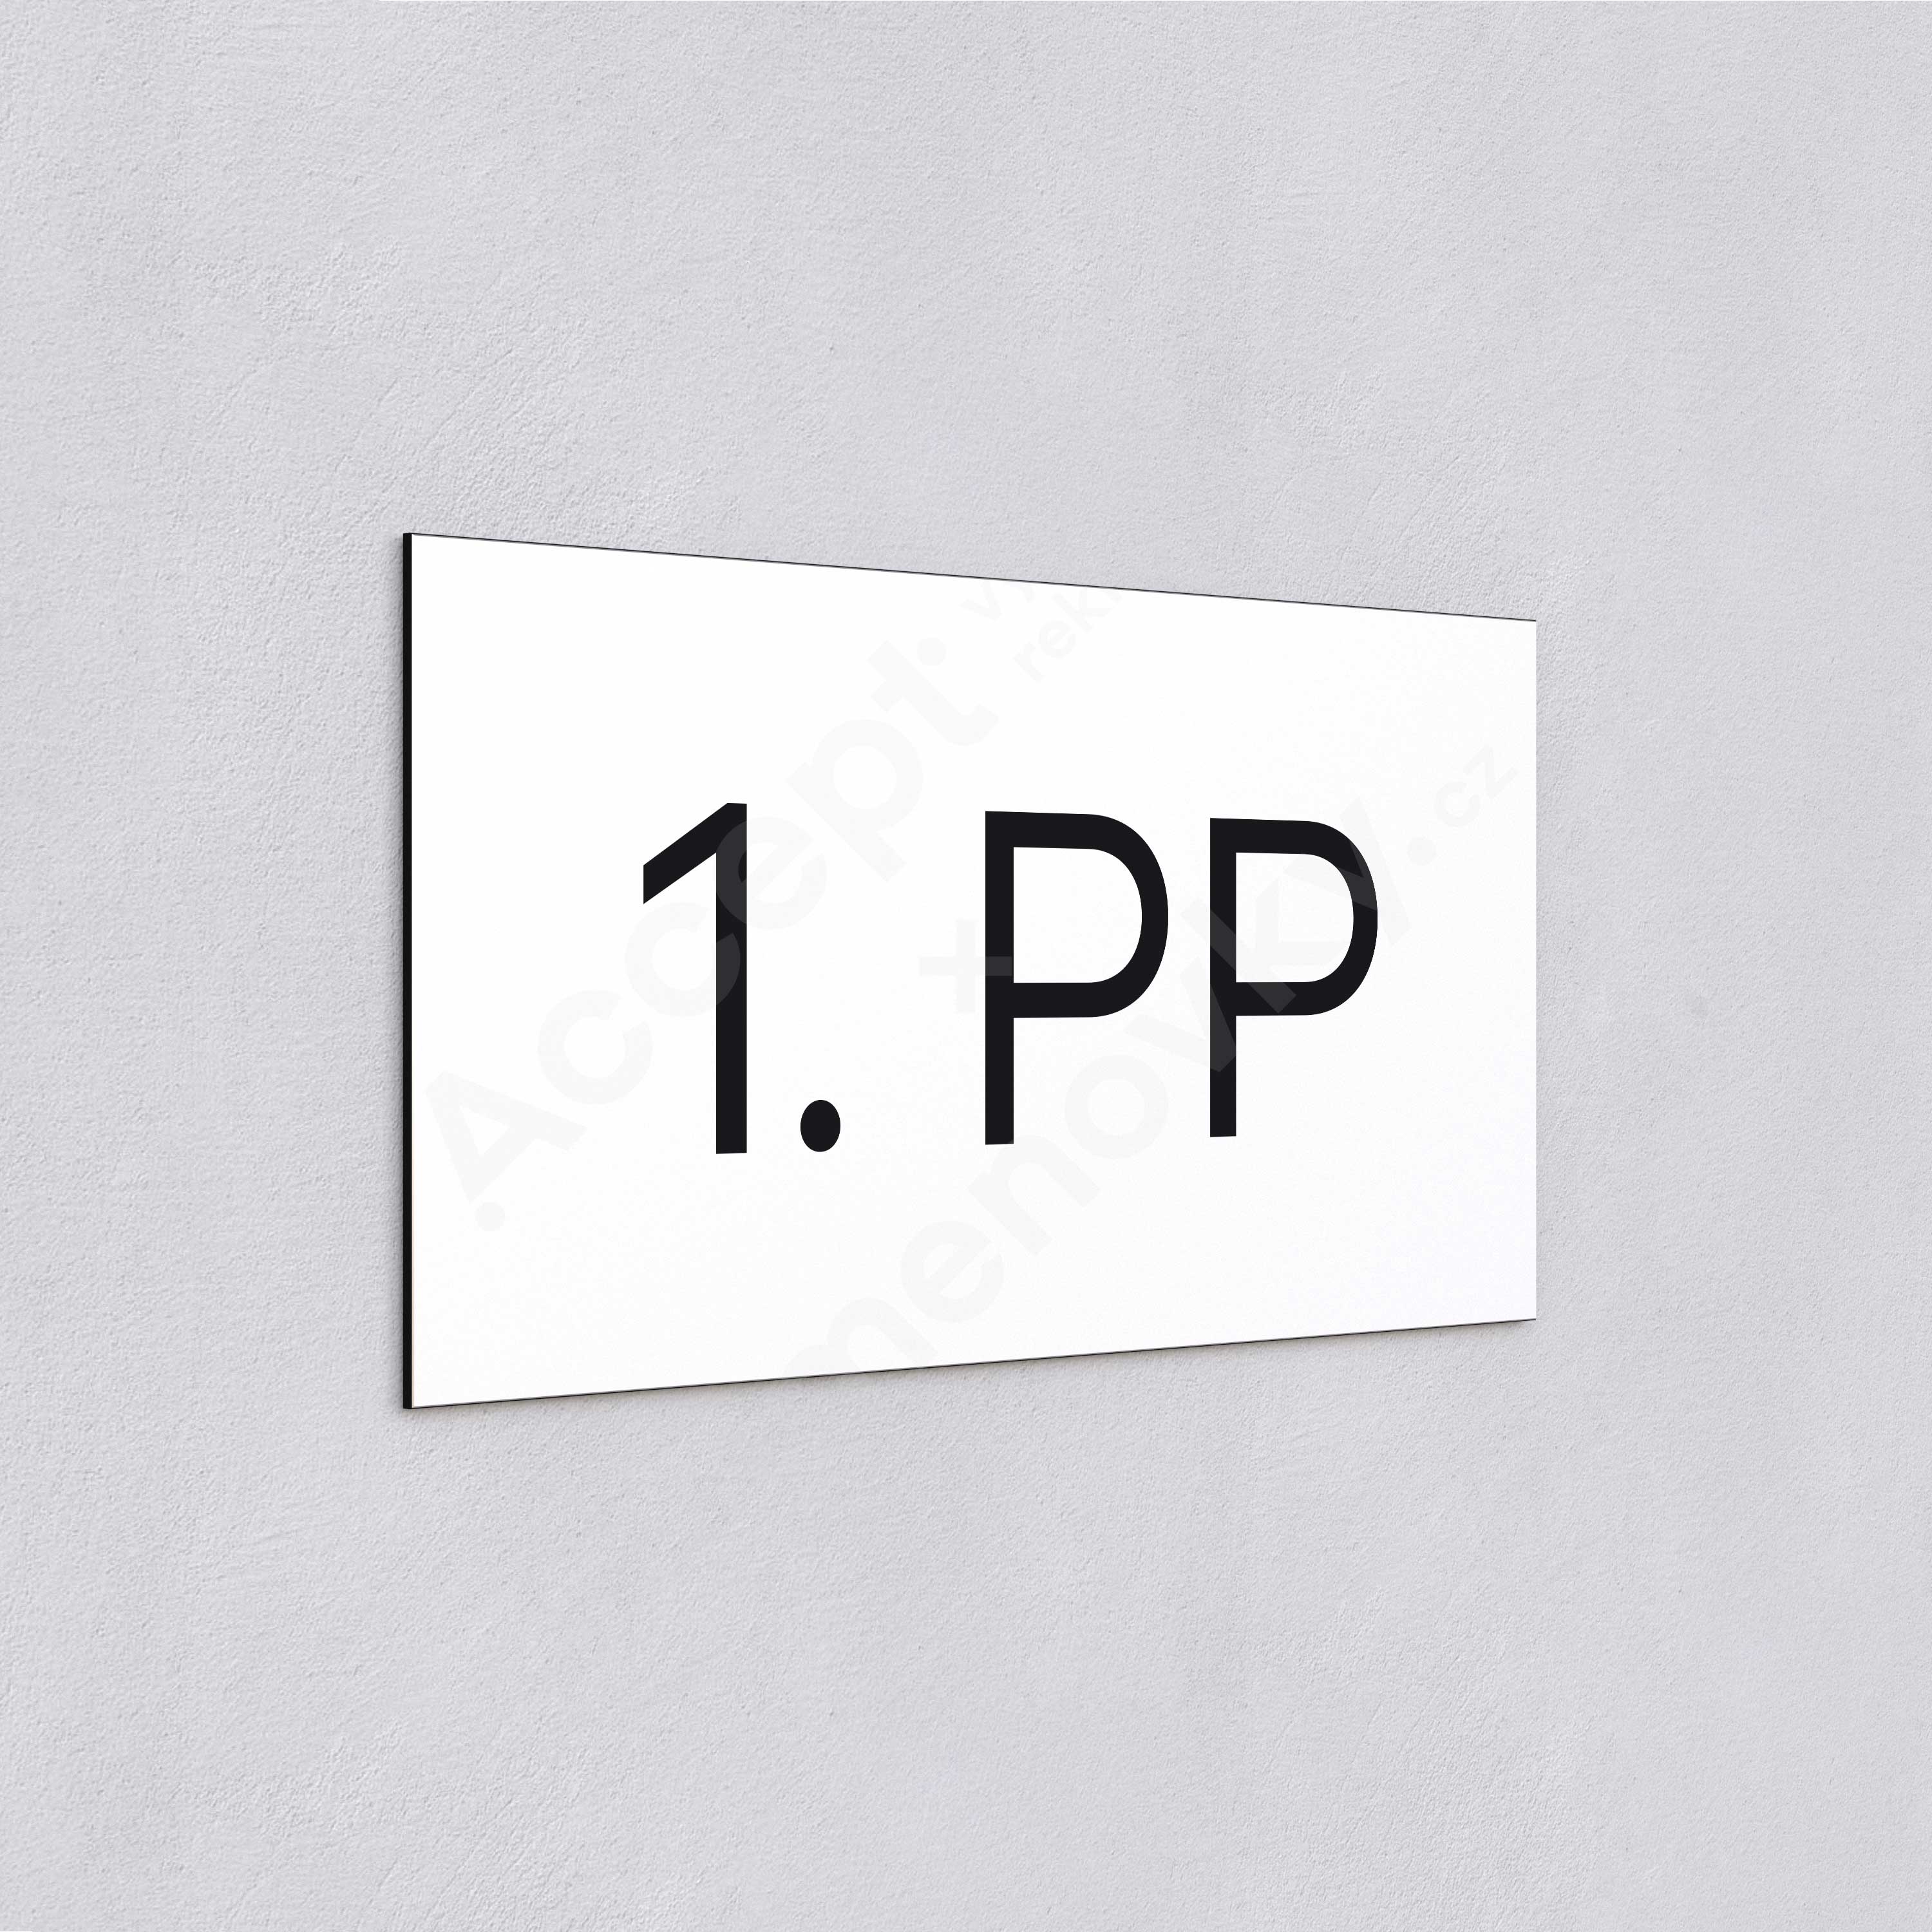 Označení podlaží "1. PP" - bílá tabulka - černý popis